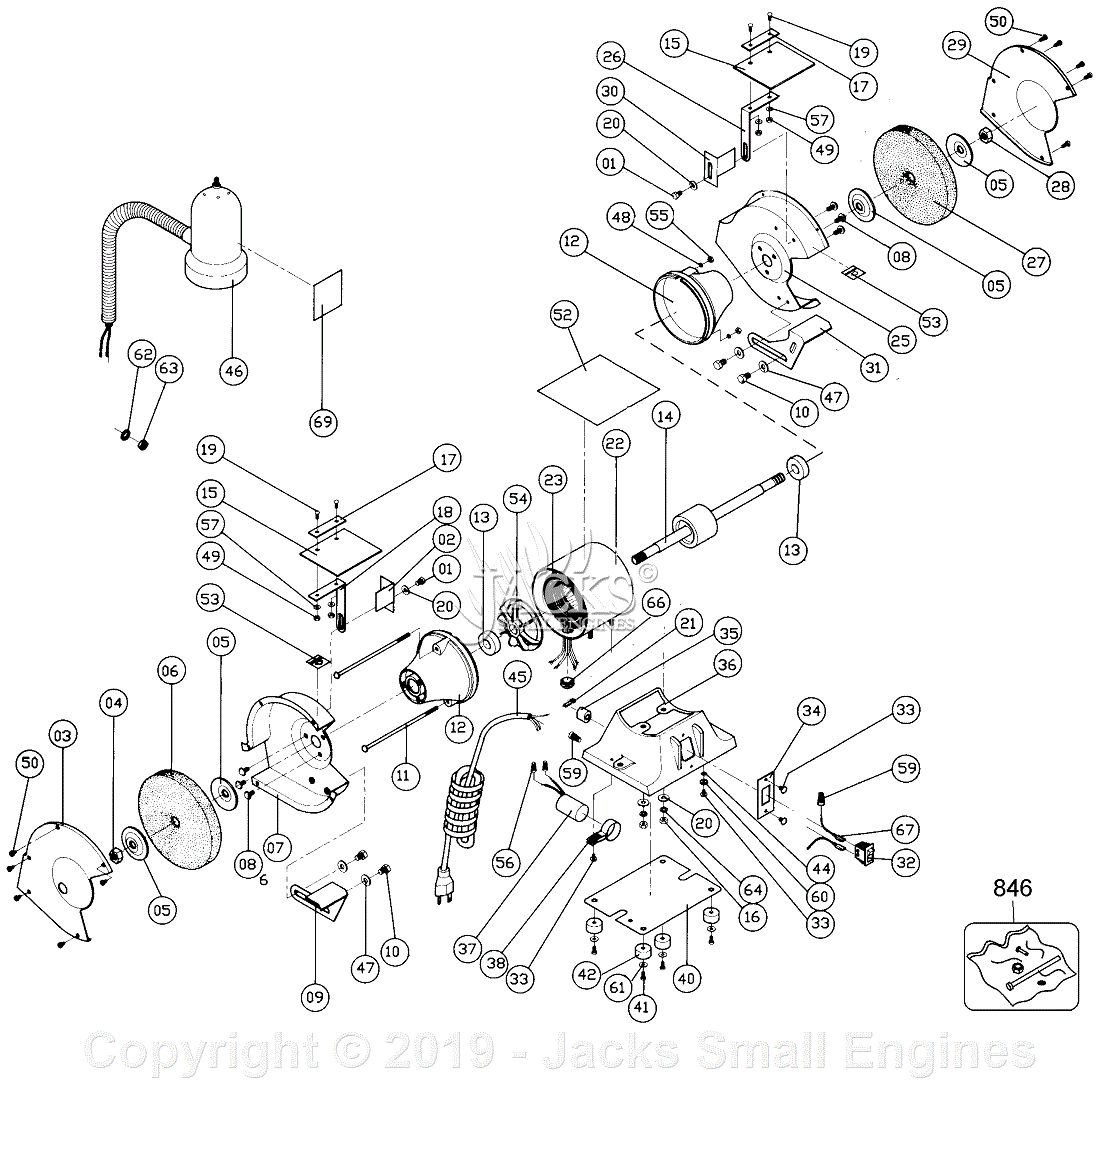 https://az417944.vo.msecnd.net/diagrams/manufacturer/black-decker/bench-grinder/9407-type-2/bench-grinder/diagram_2.gif